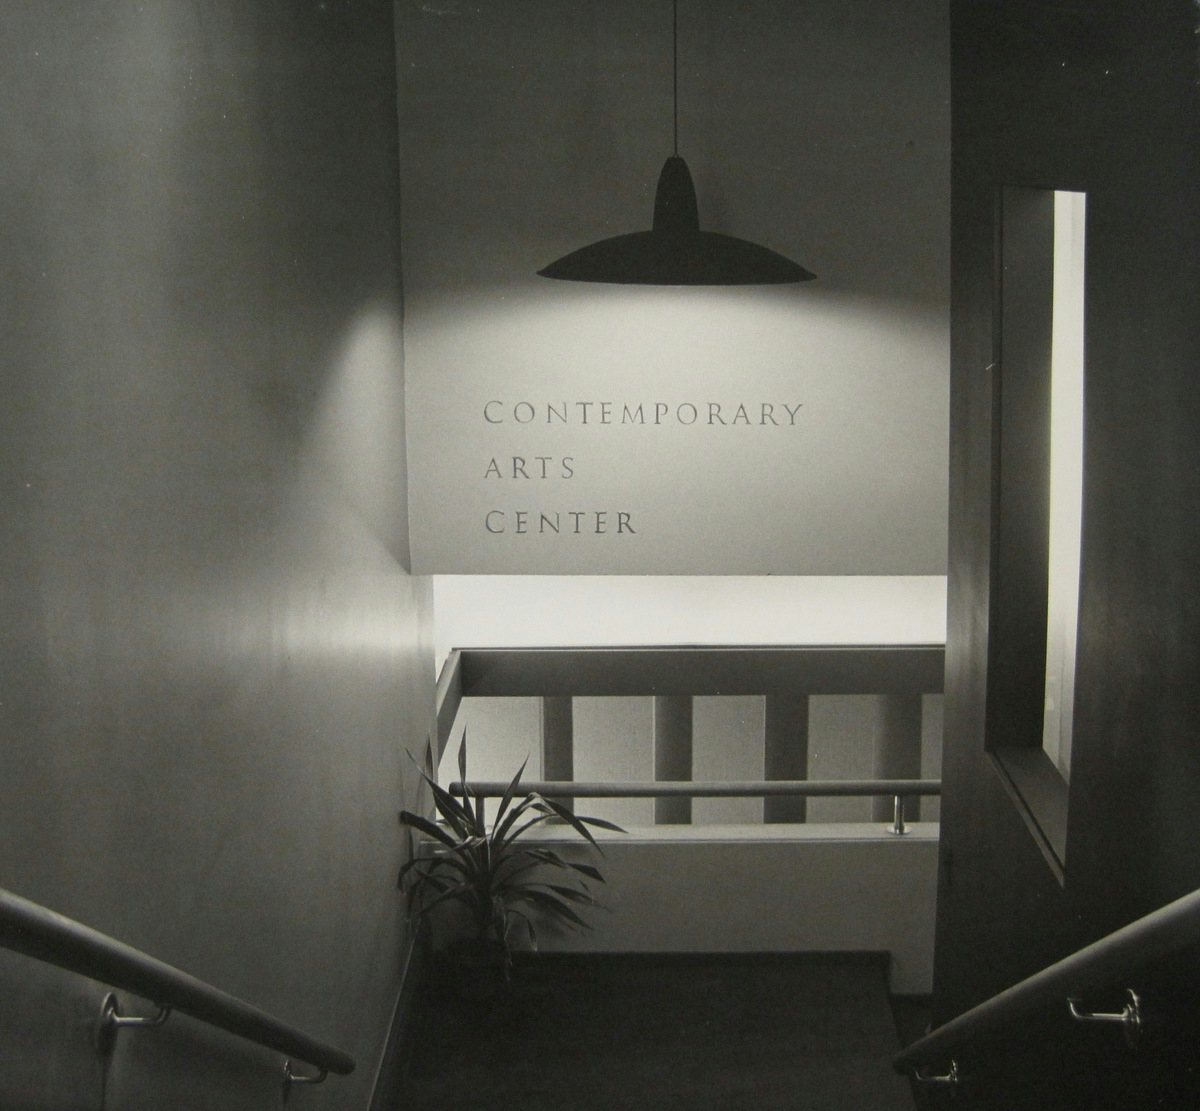 The Contemporary Arts Center